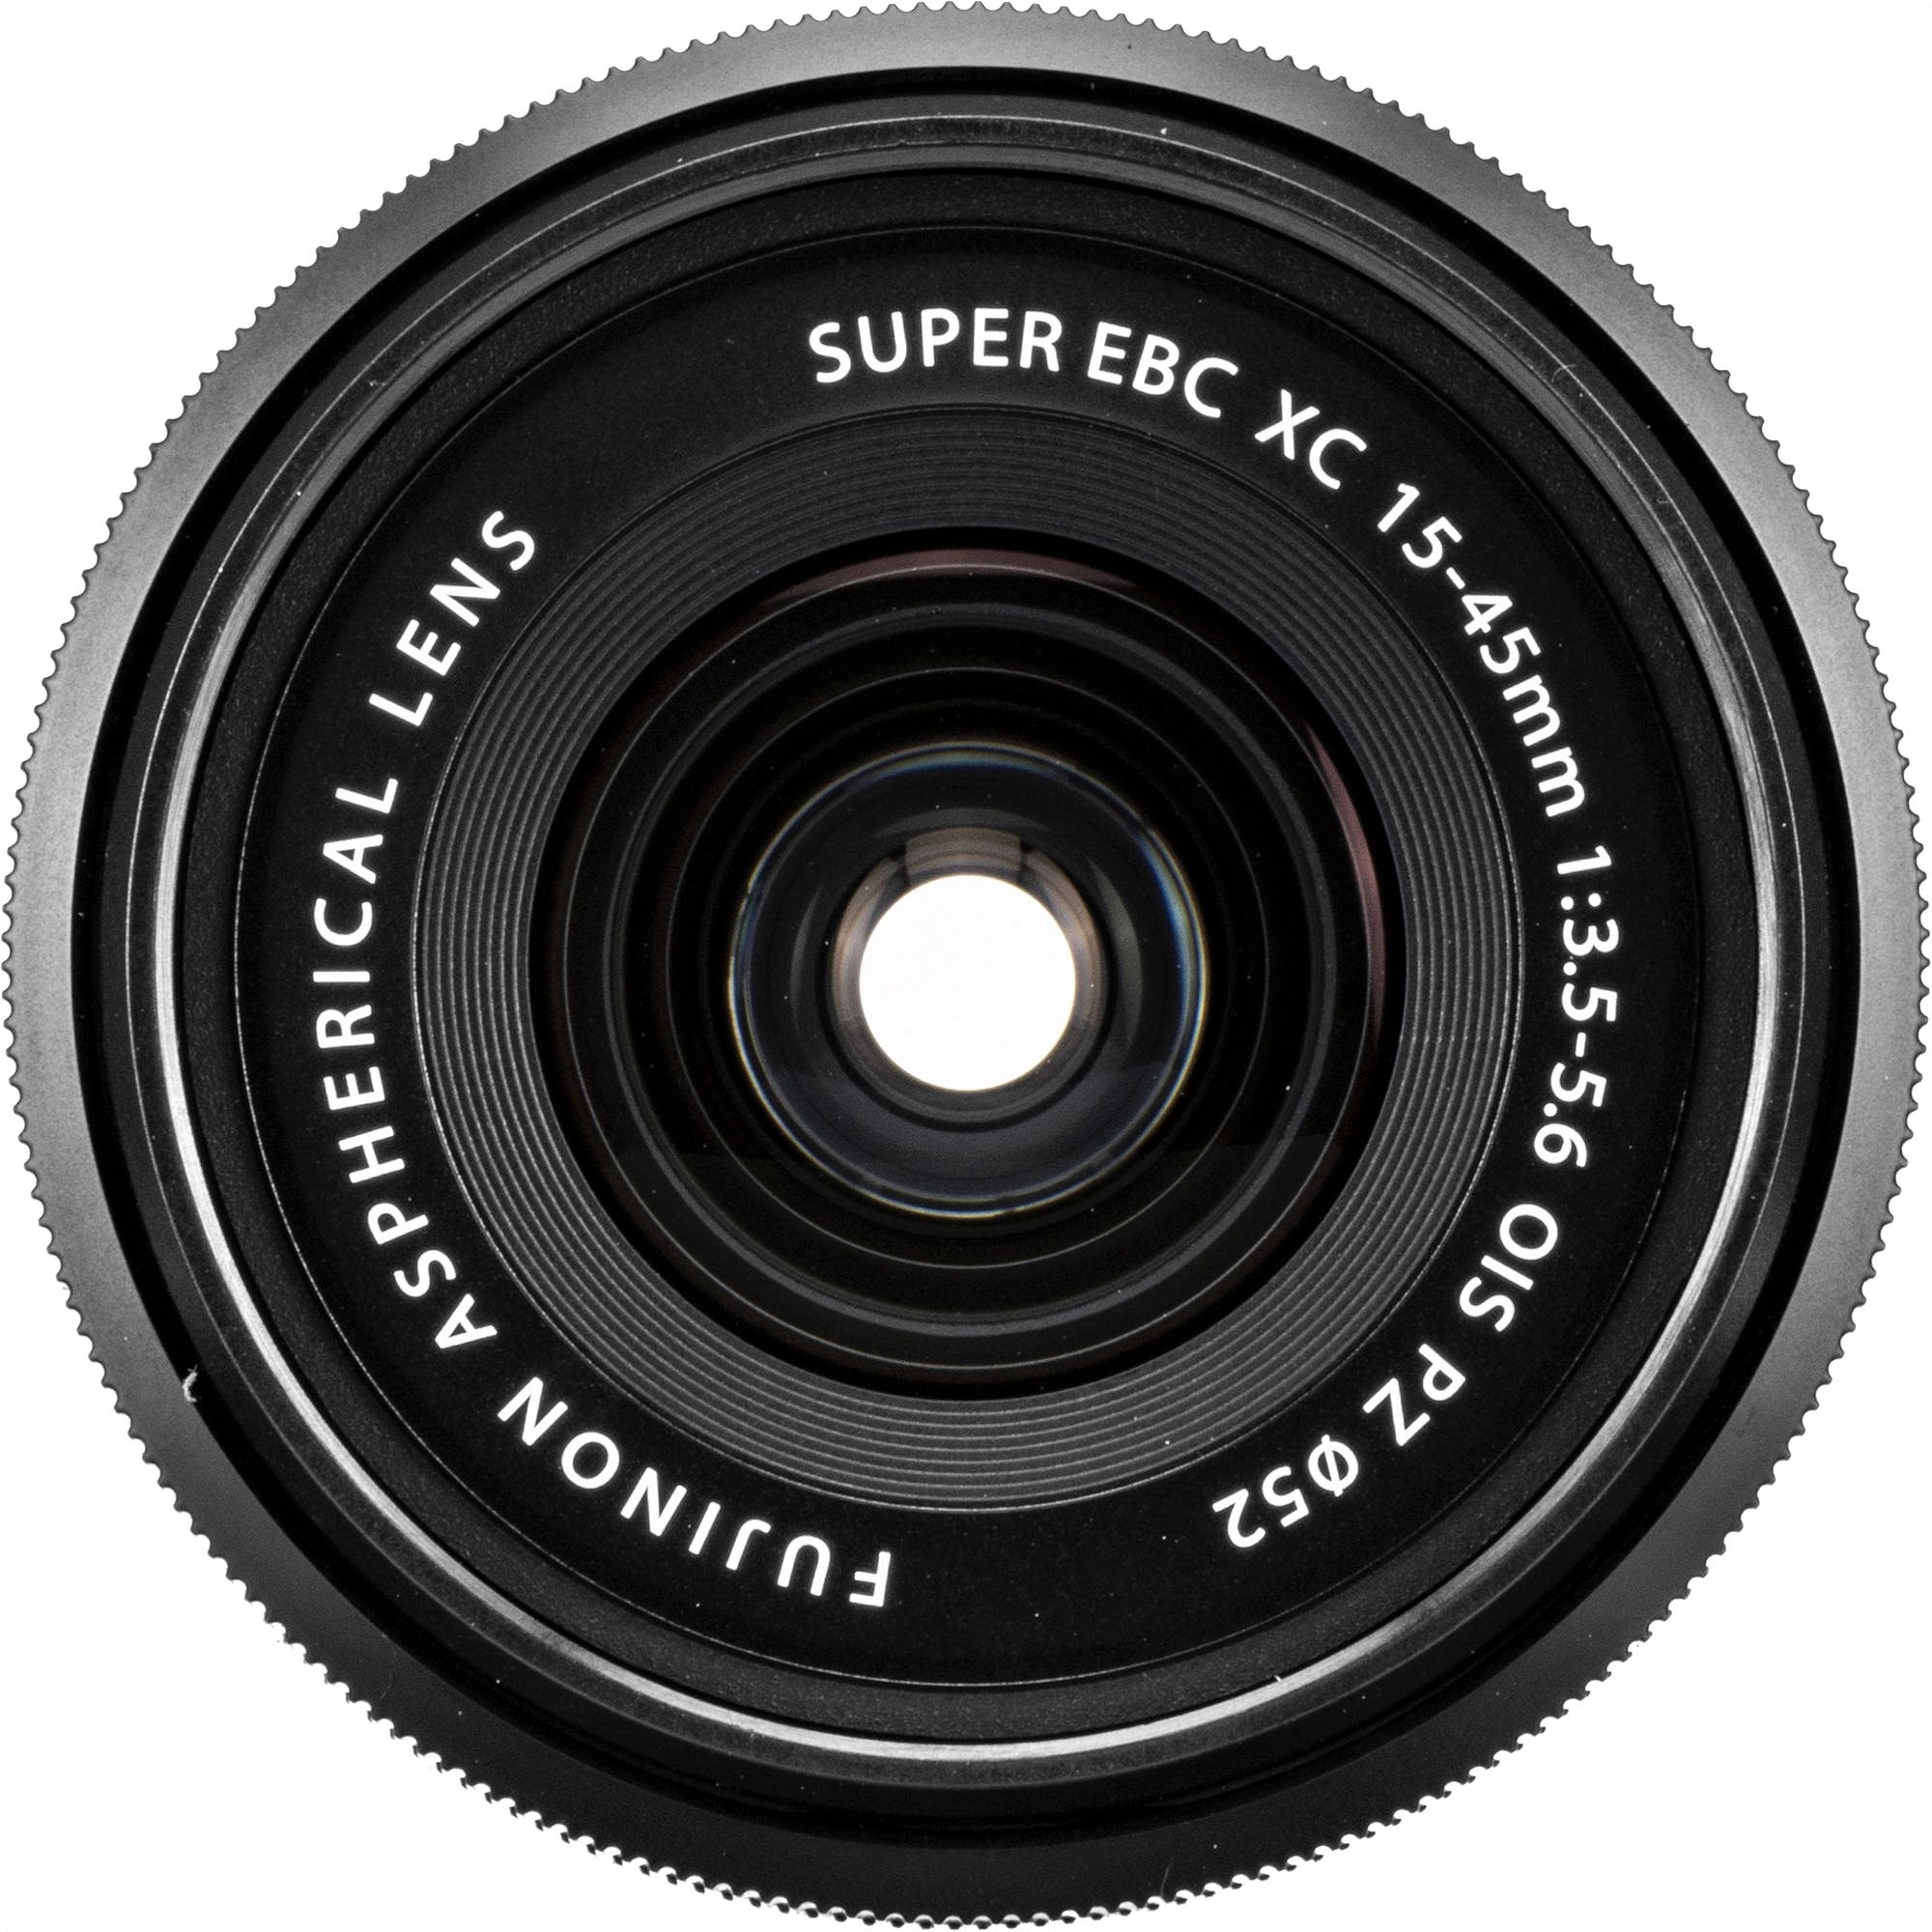 Fujifilm XC 15-45mm f/3.5-5.6 OIS PZ Lens, Black - Front View